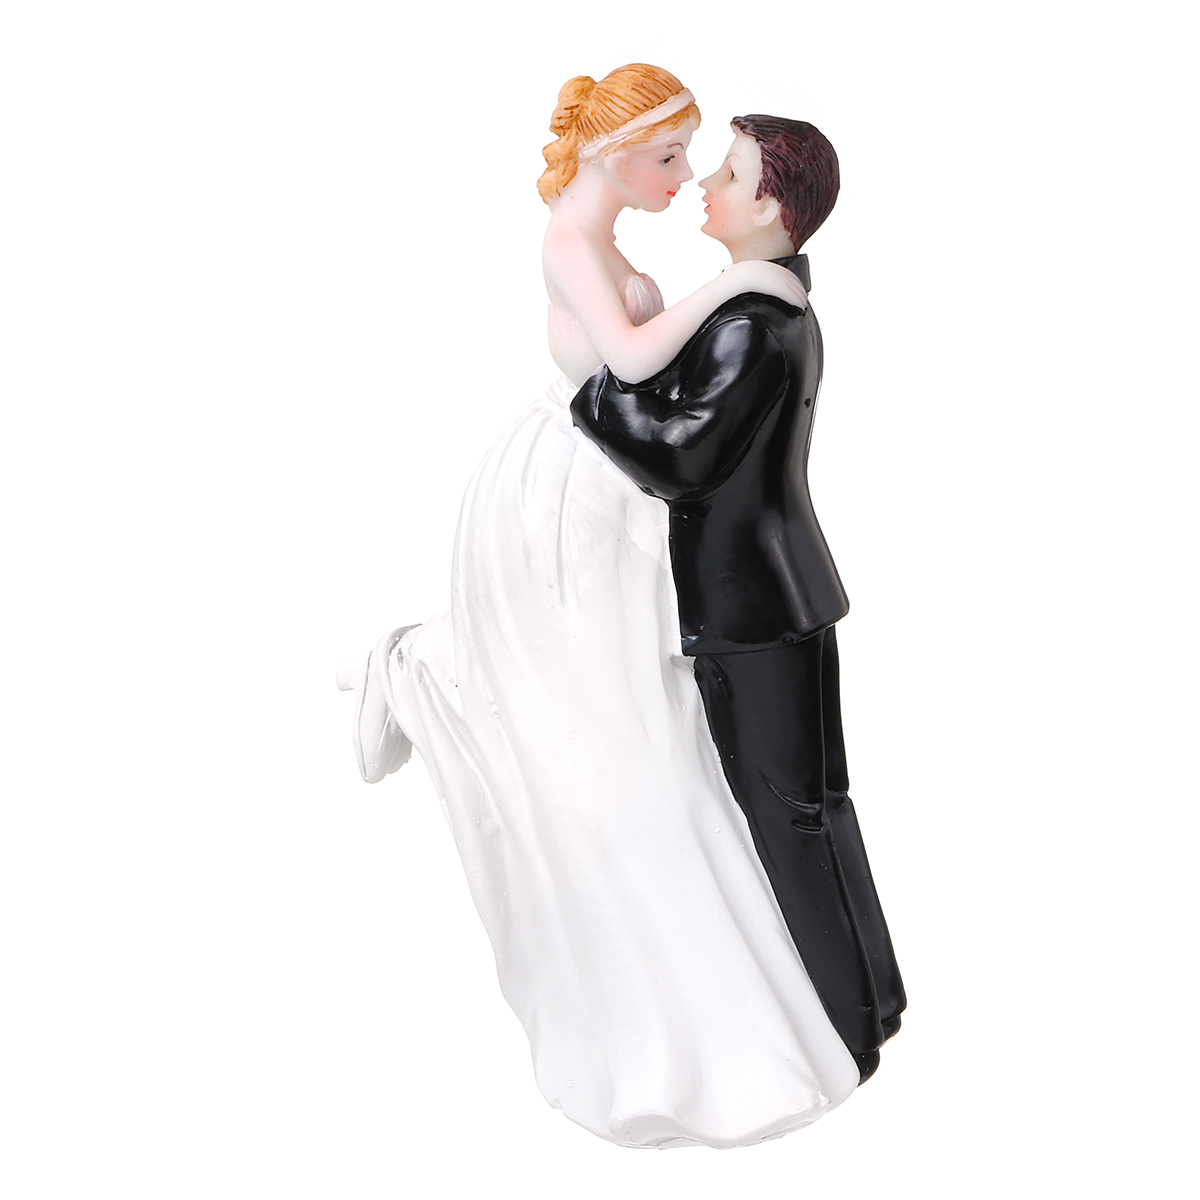 ROMANTIC FUNNY WEDDING CAKE TOPPER FIGURE BRIDE GROOM COUPLE BRIDAL 